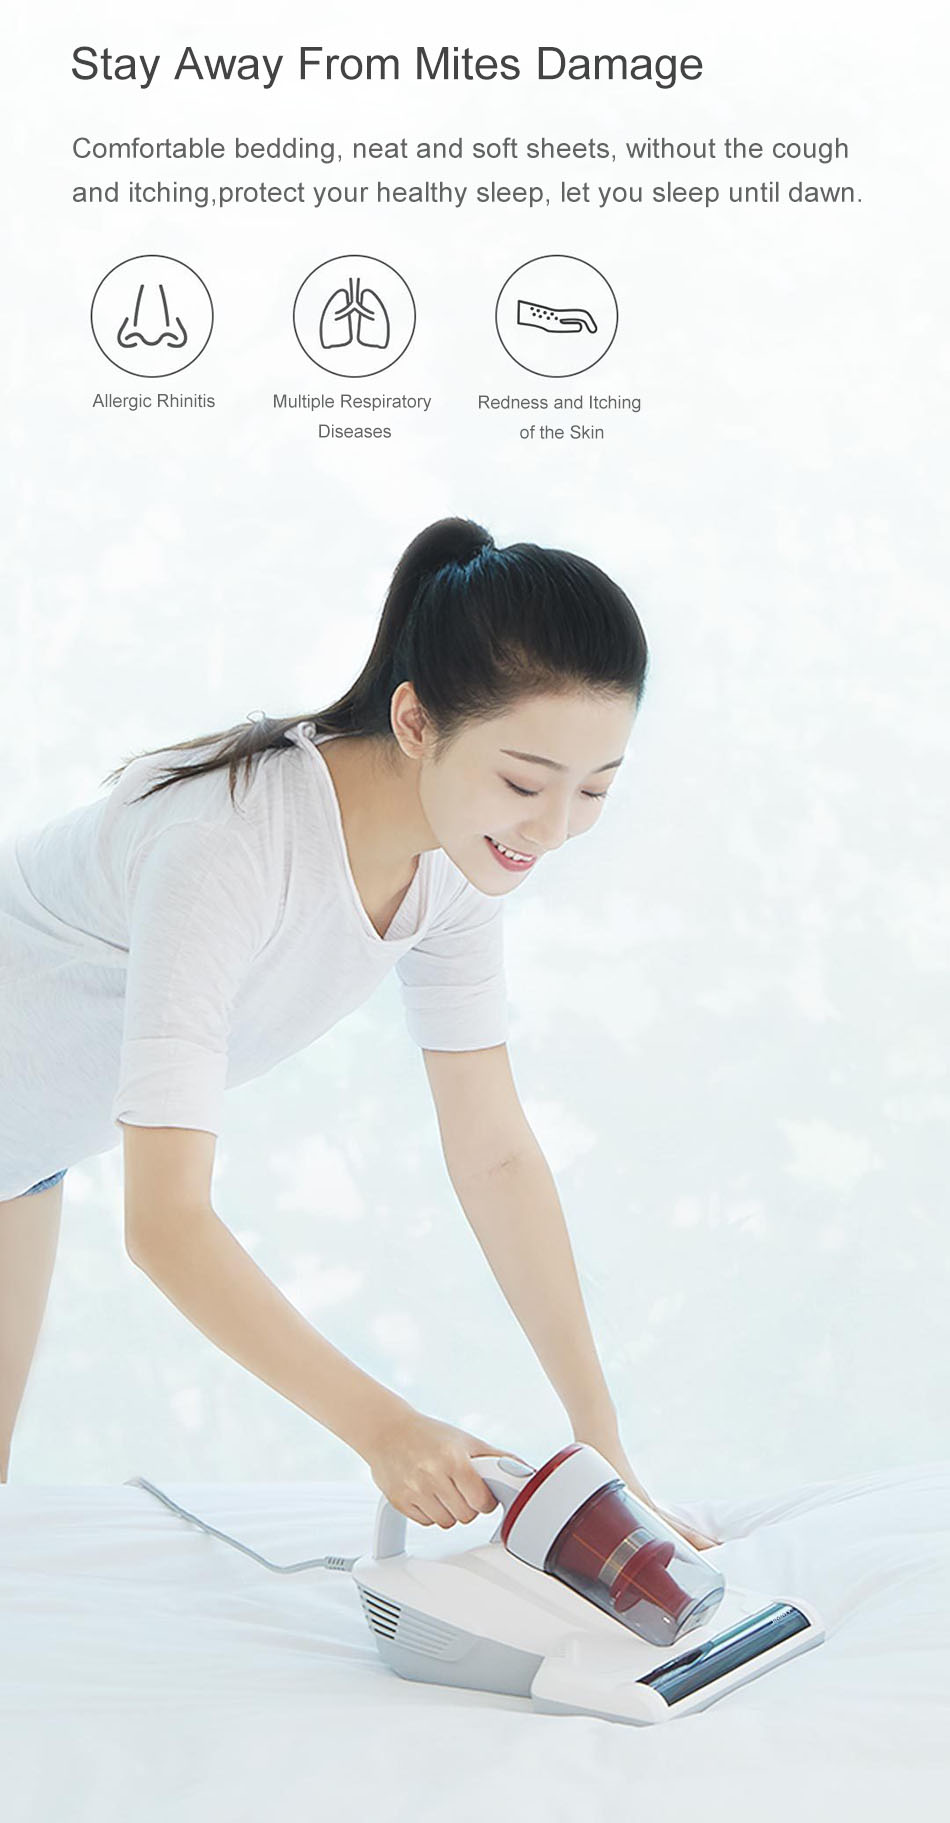 Xiaomi Jimmy JV11 Handheld Dust Mite Vacuum Cleaner Controller Ultraviolet Sterilization for Sofa 17